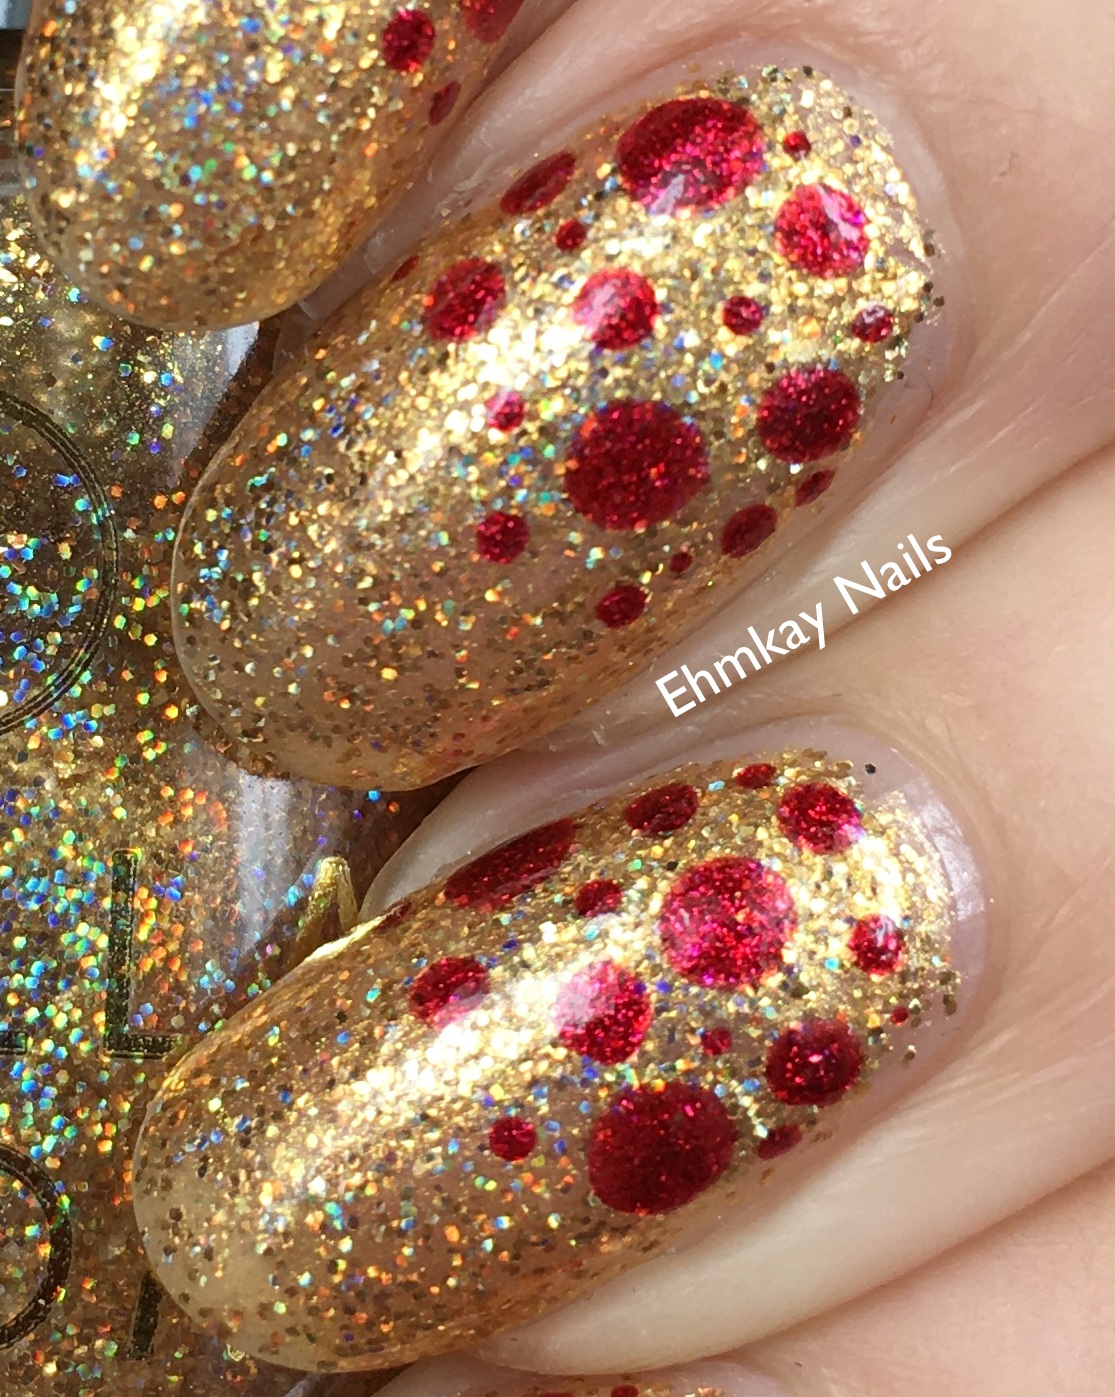 ehmkay nails: Festive Nail Art: Gold with Red Dots